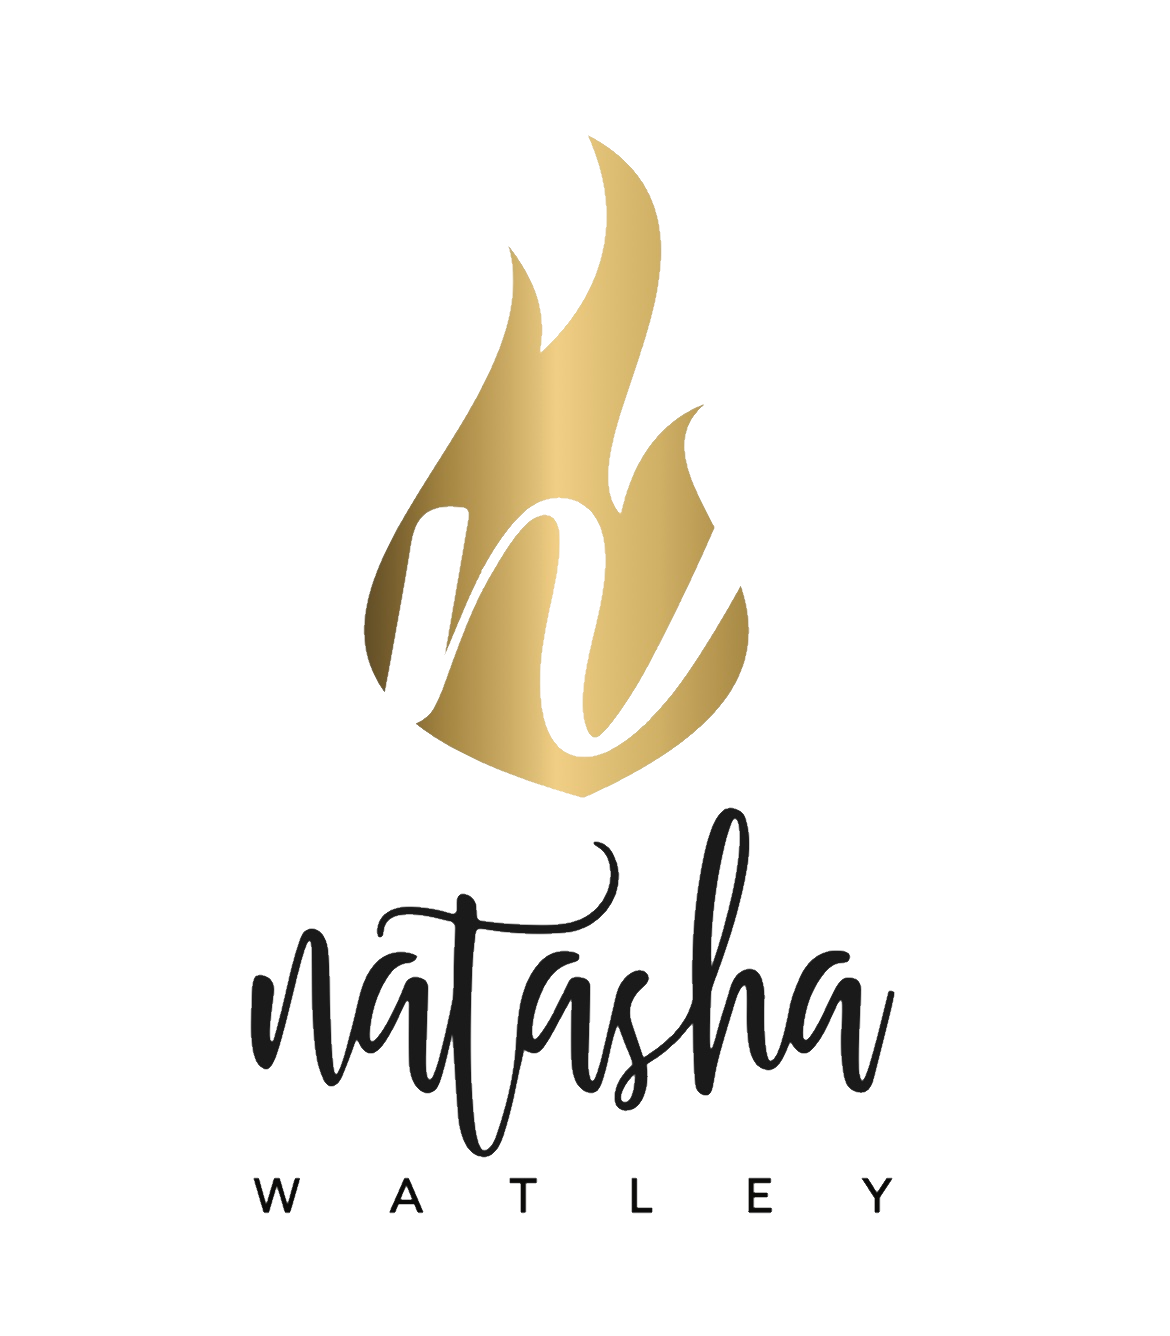 Natasha Watley - The Official Website